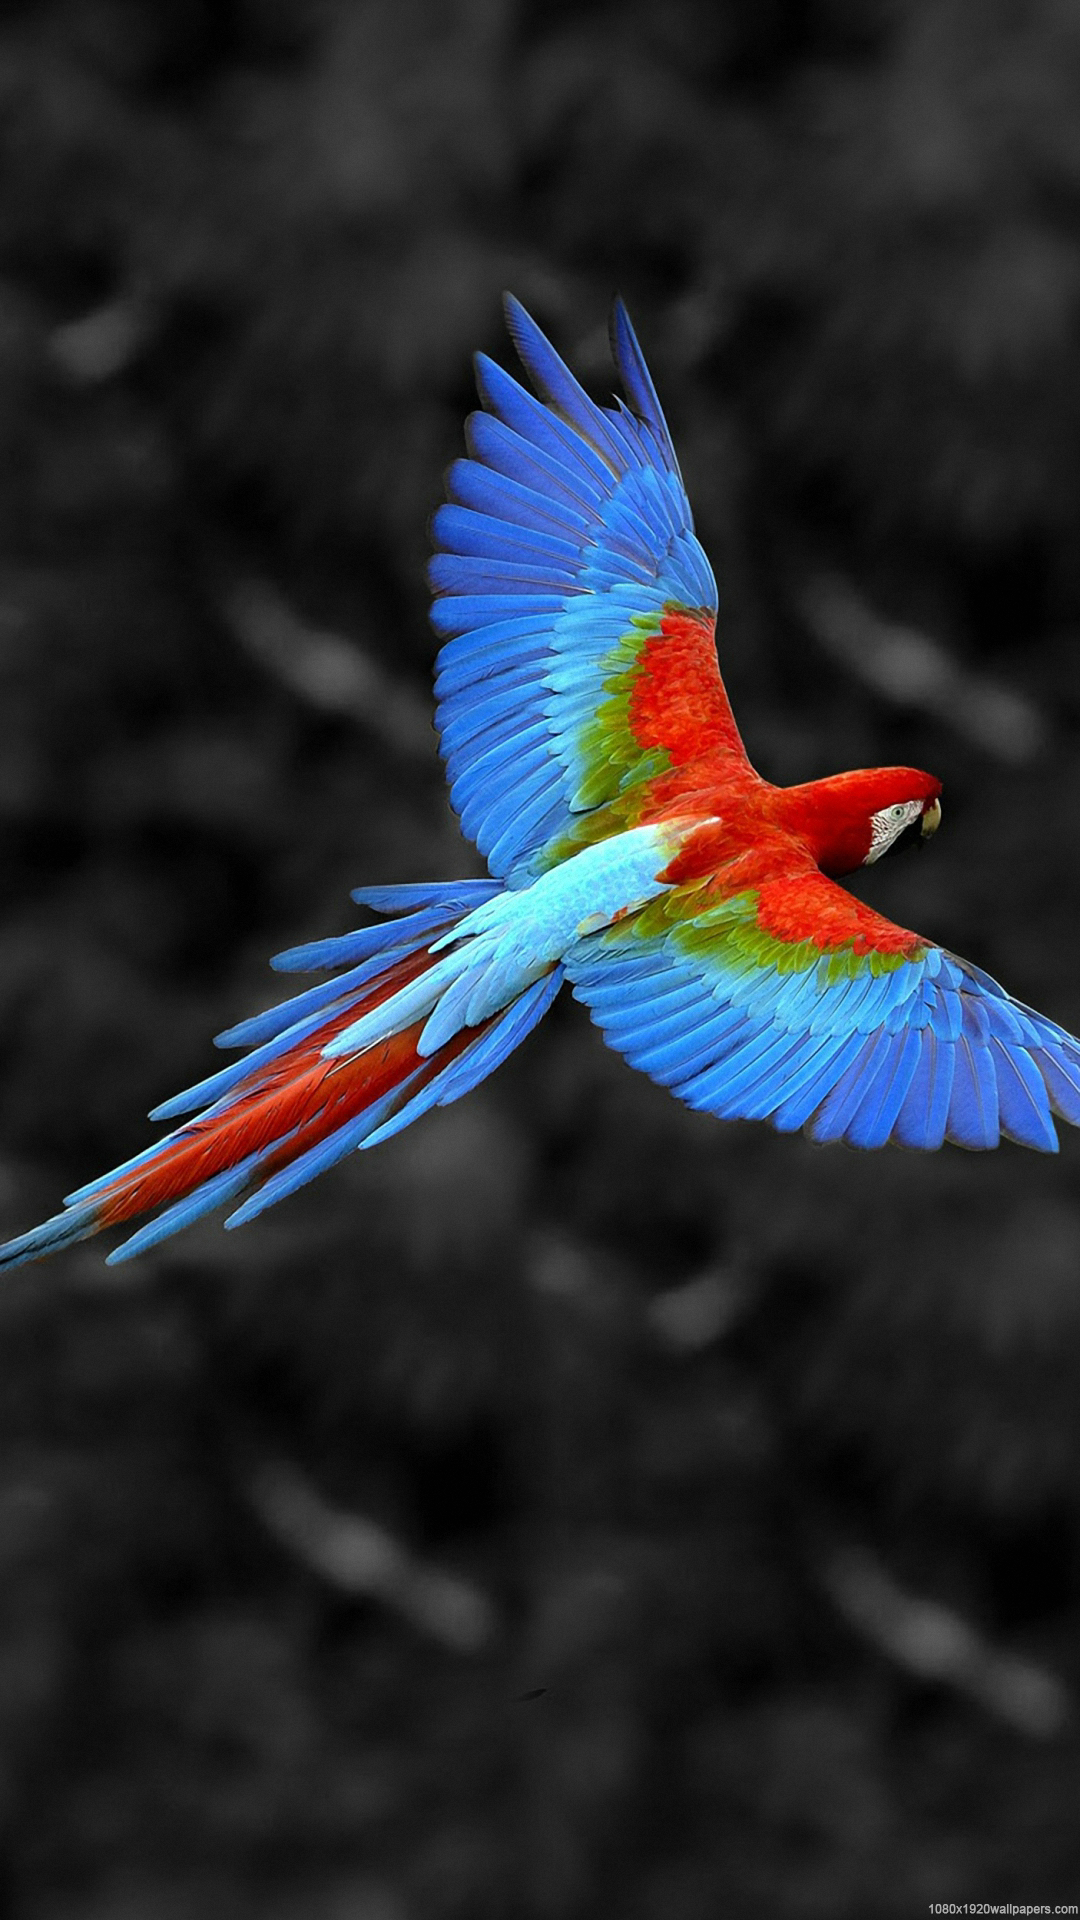 hd wallpapers for iphone 6 1080p,bird,beak,macaw,wing,parrot